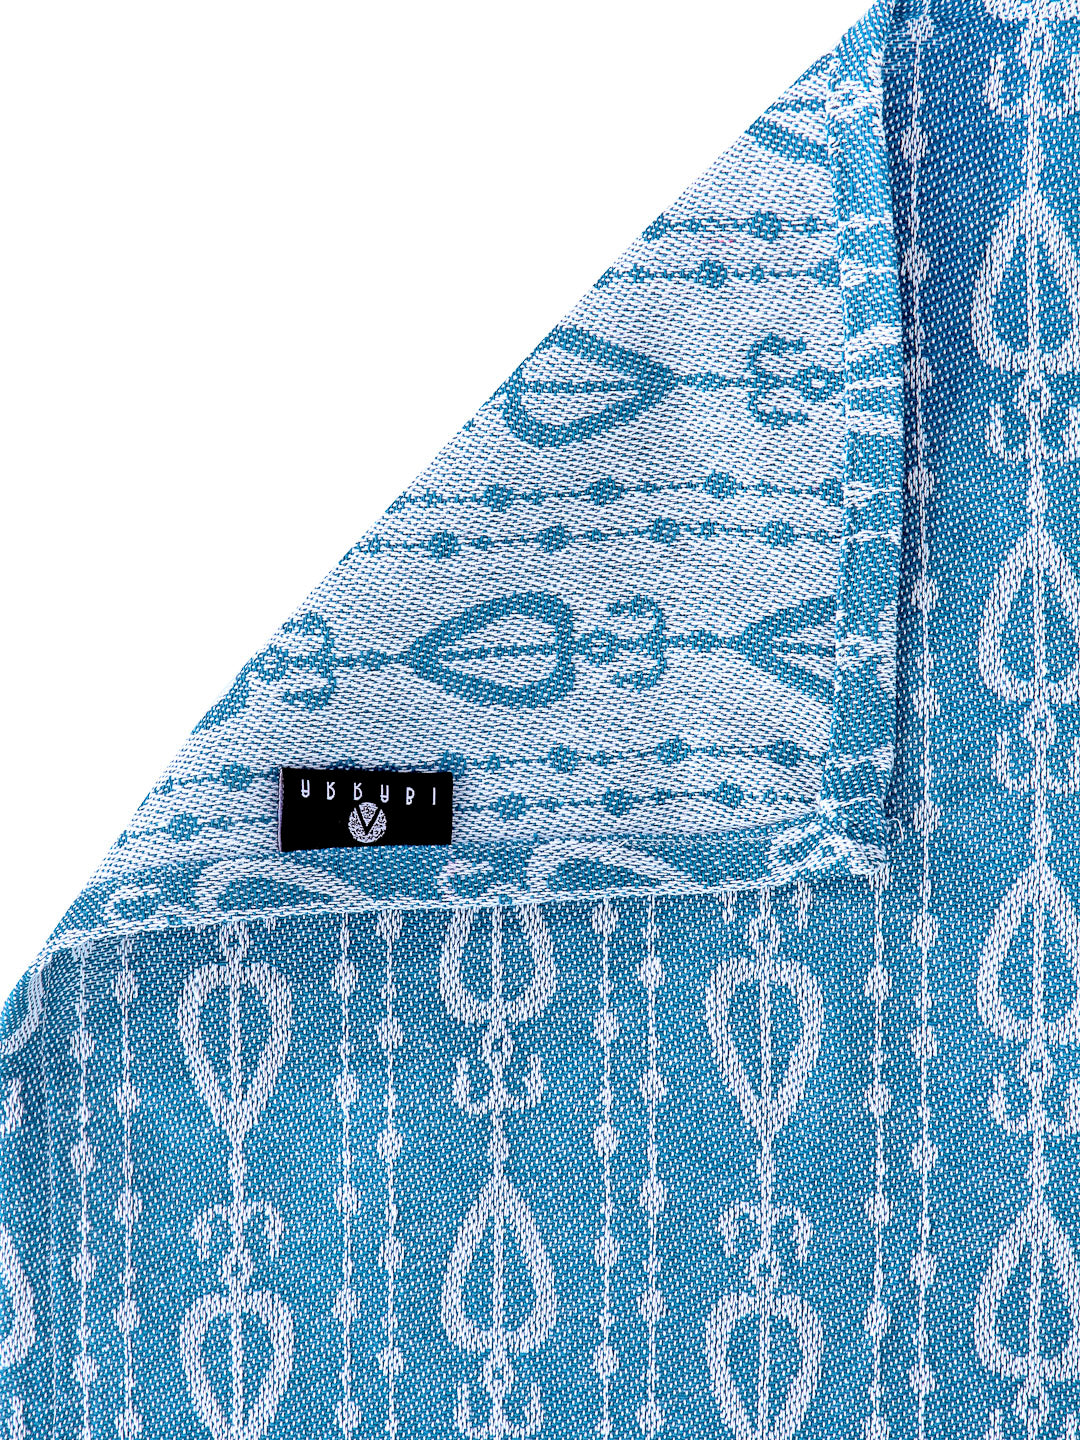 Arrabi Blue Indian Handwoven Cotton Single Size Bedsheet with 1 Pillow Cover (230 x 150 cm)